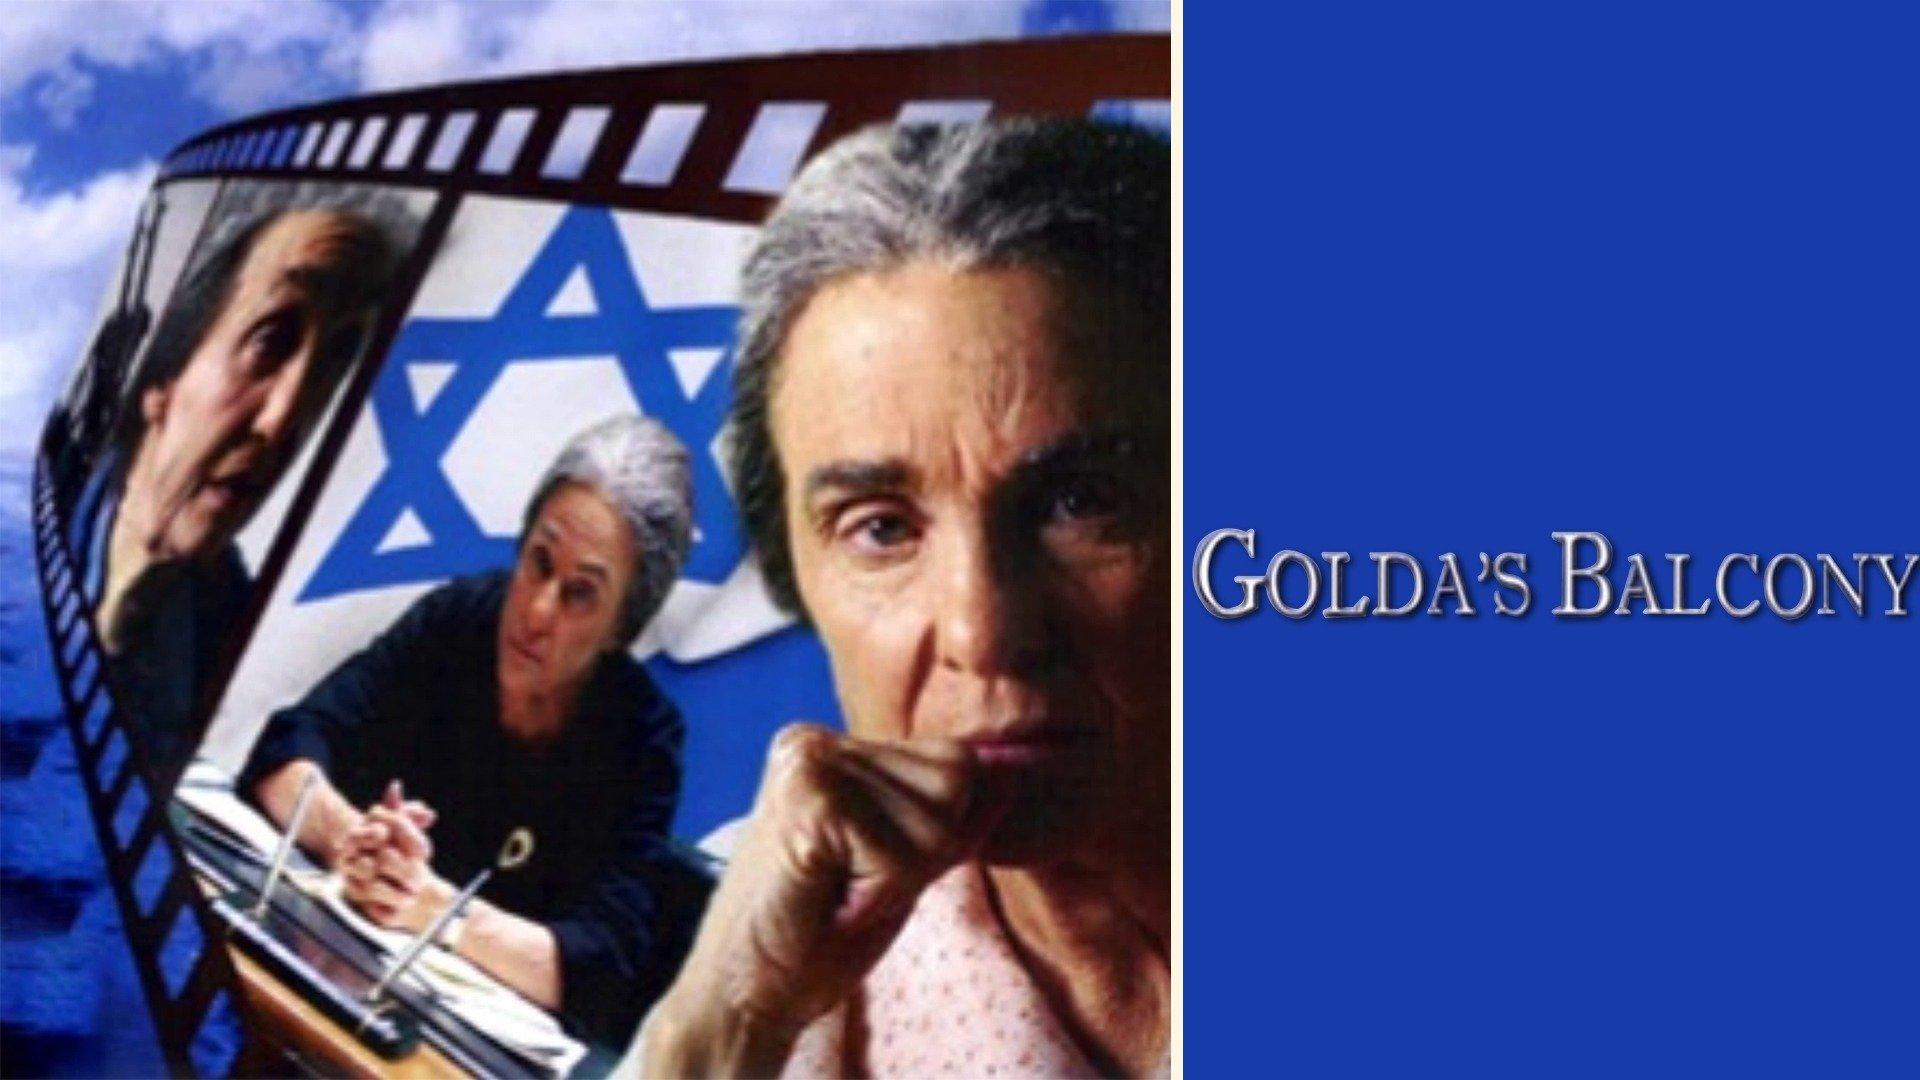 Watch Golda's Balcony Streaming Online on Philo (Free Trial)